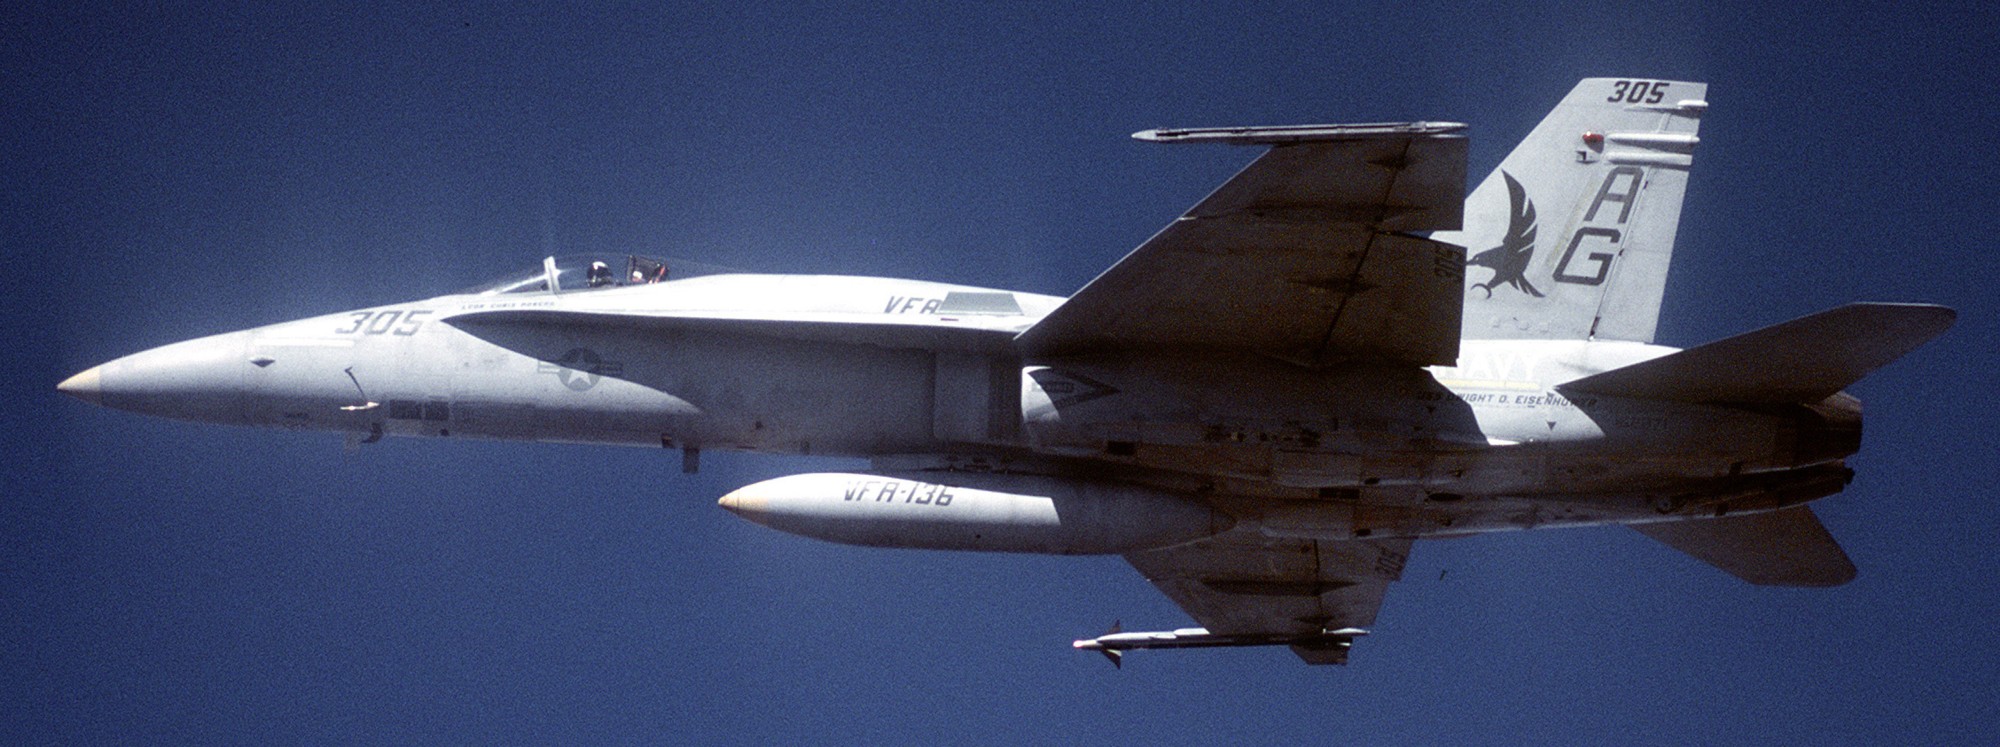 vfa-136 knighthawks strike fighter squadron f/a-18a hornet 1989 94 cvw-7